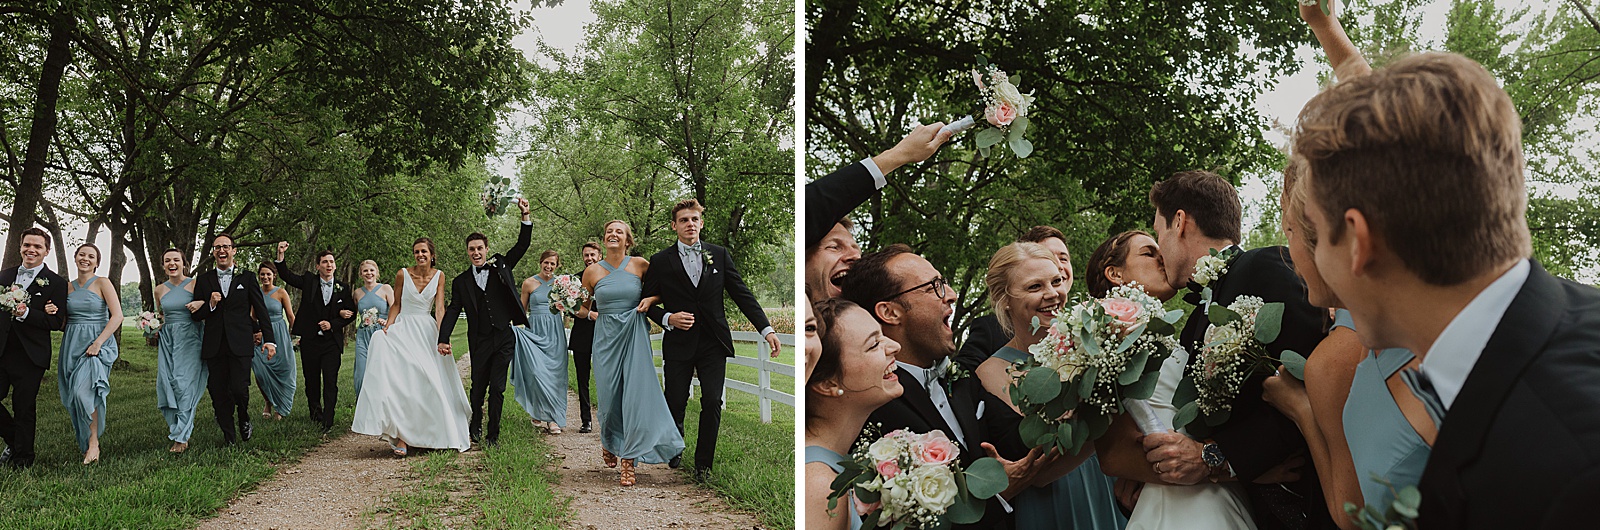 Eighteen Ninety Kansas City wedding captured by Caitlyn Cloud Photography